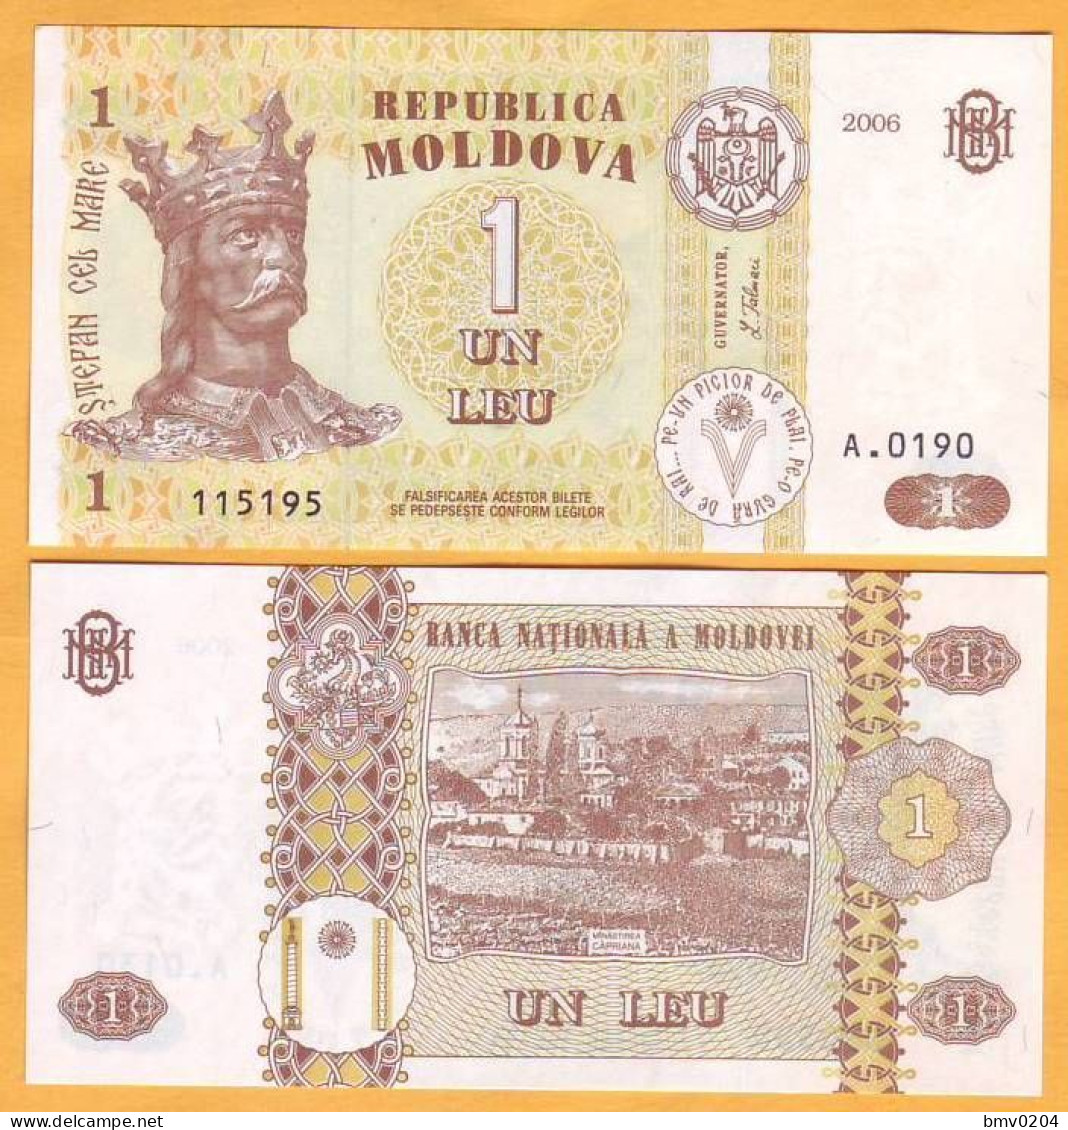 Moldova Moldavie  5 Banknotes  "1 LEI  2006", UNC  One Set Of 5 1 Leu Banknotes. - Moldova